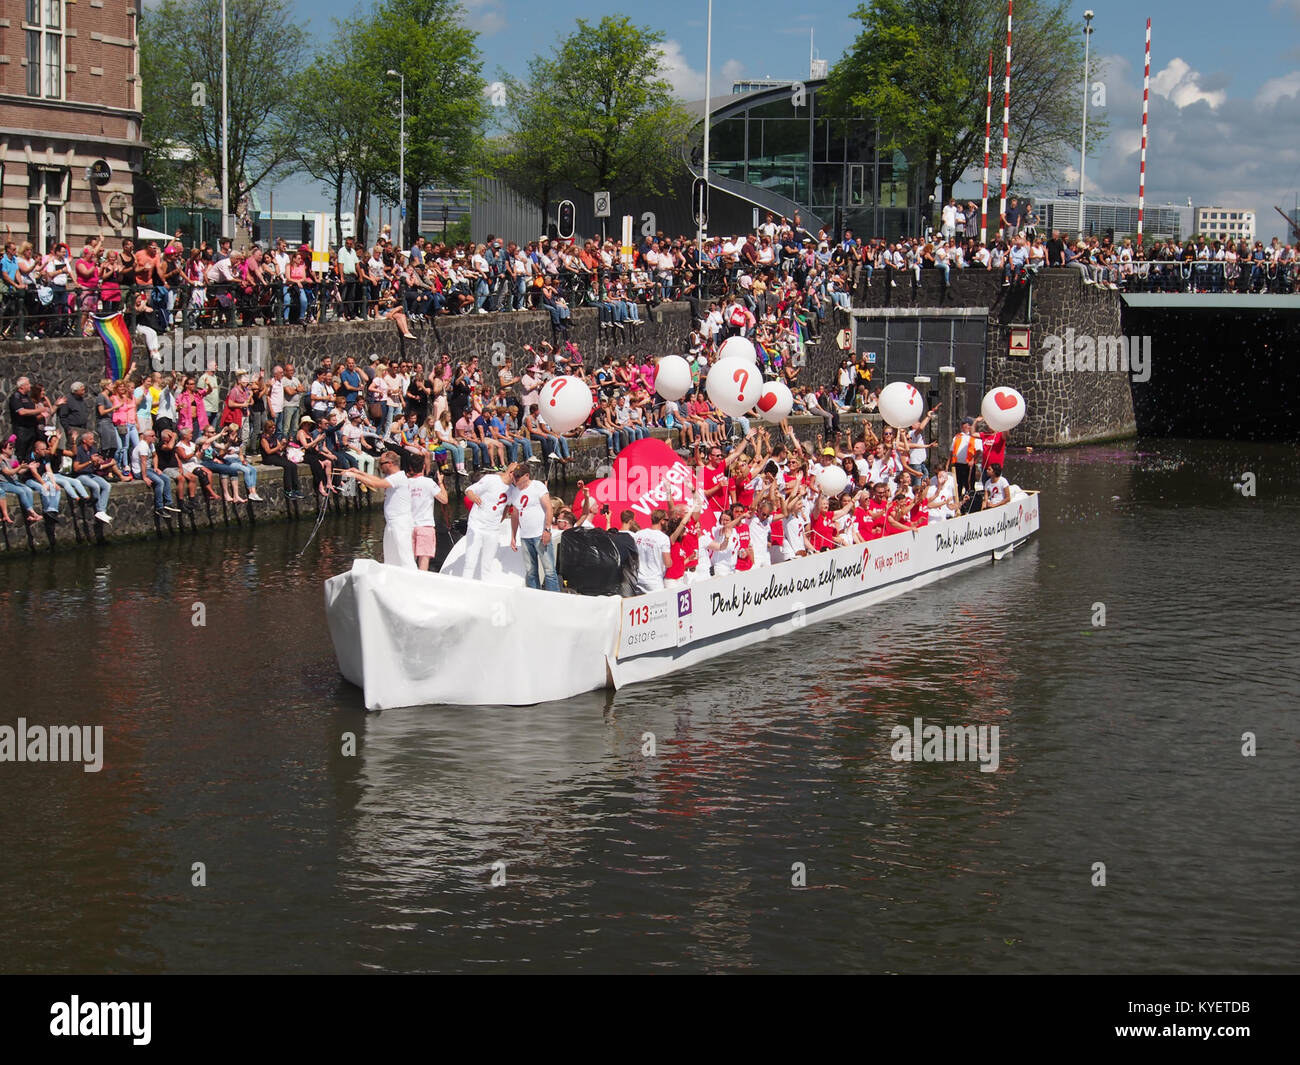 Voile 25113 DEnk je wel k aan zelfmoord, Canal Amsterdam 2017 Parade foto 1 Banque D'Images